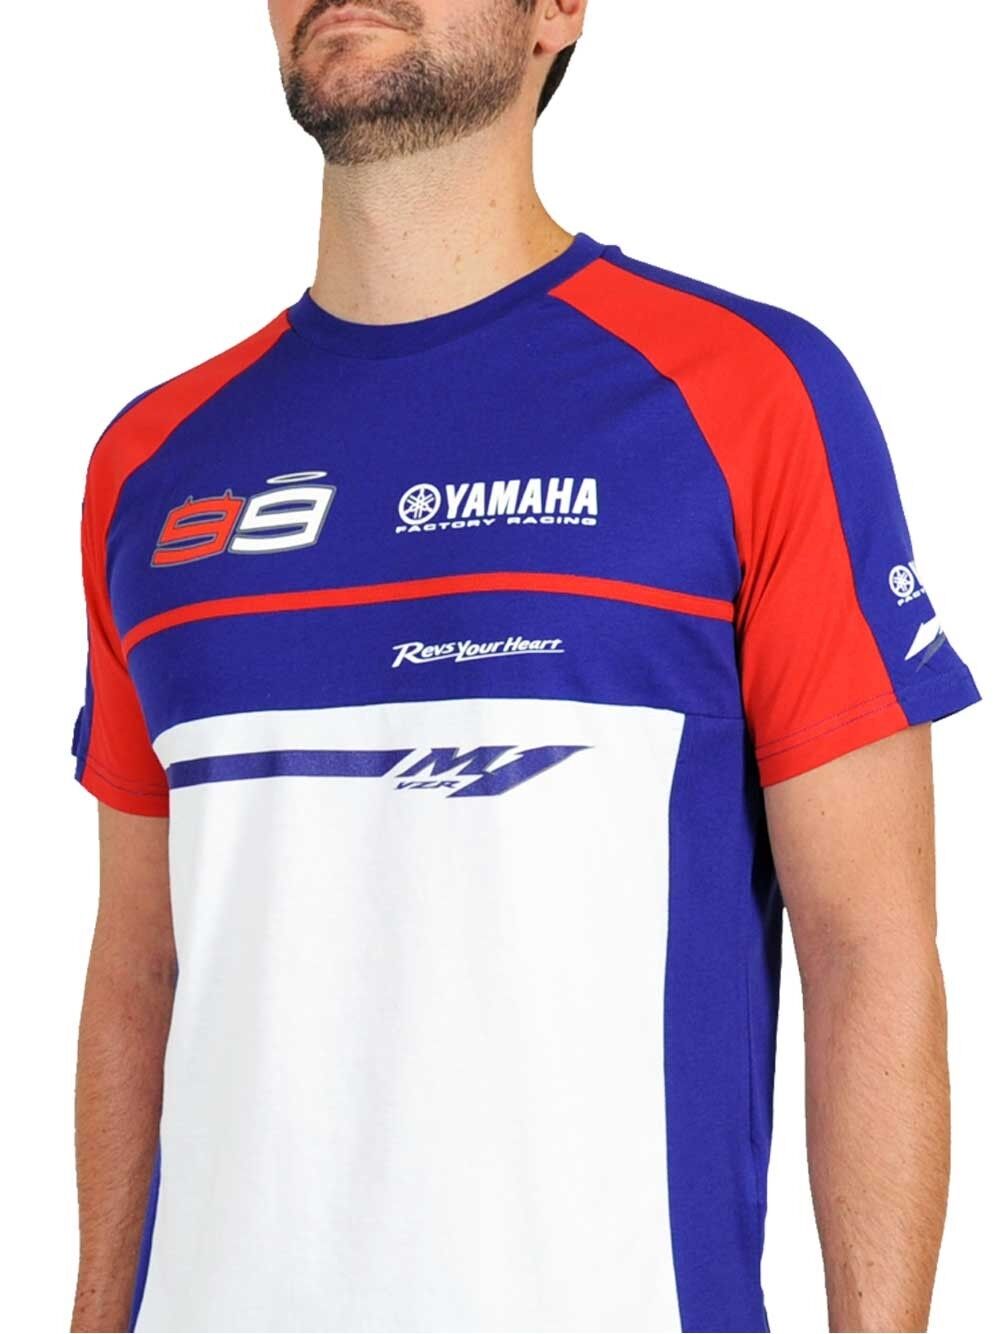 New Official Jorge Lorenzo Dual Yamaha T-Shirt - 15 37001